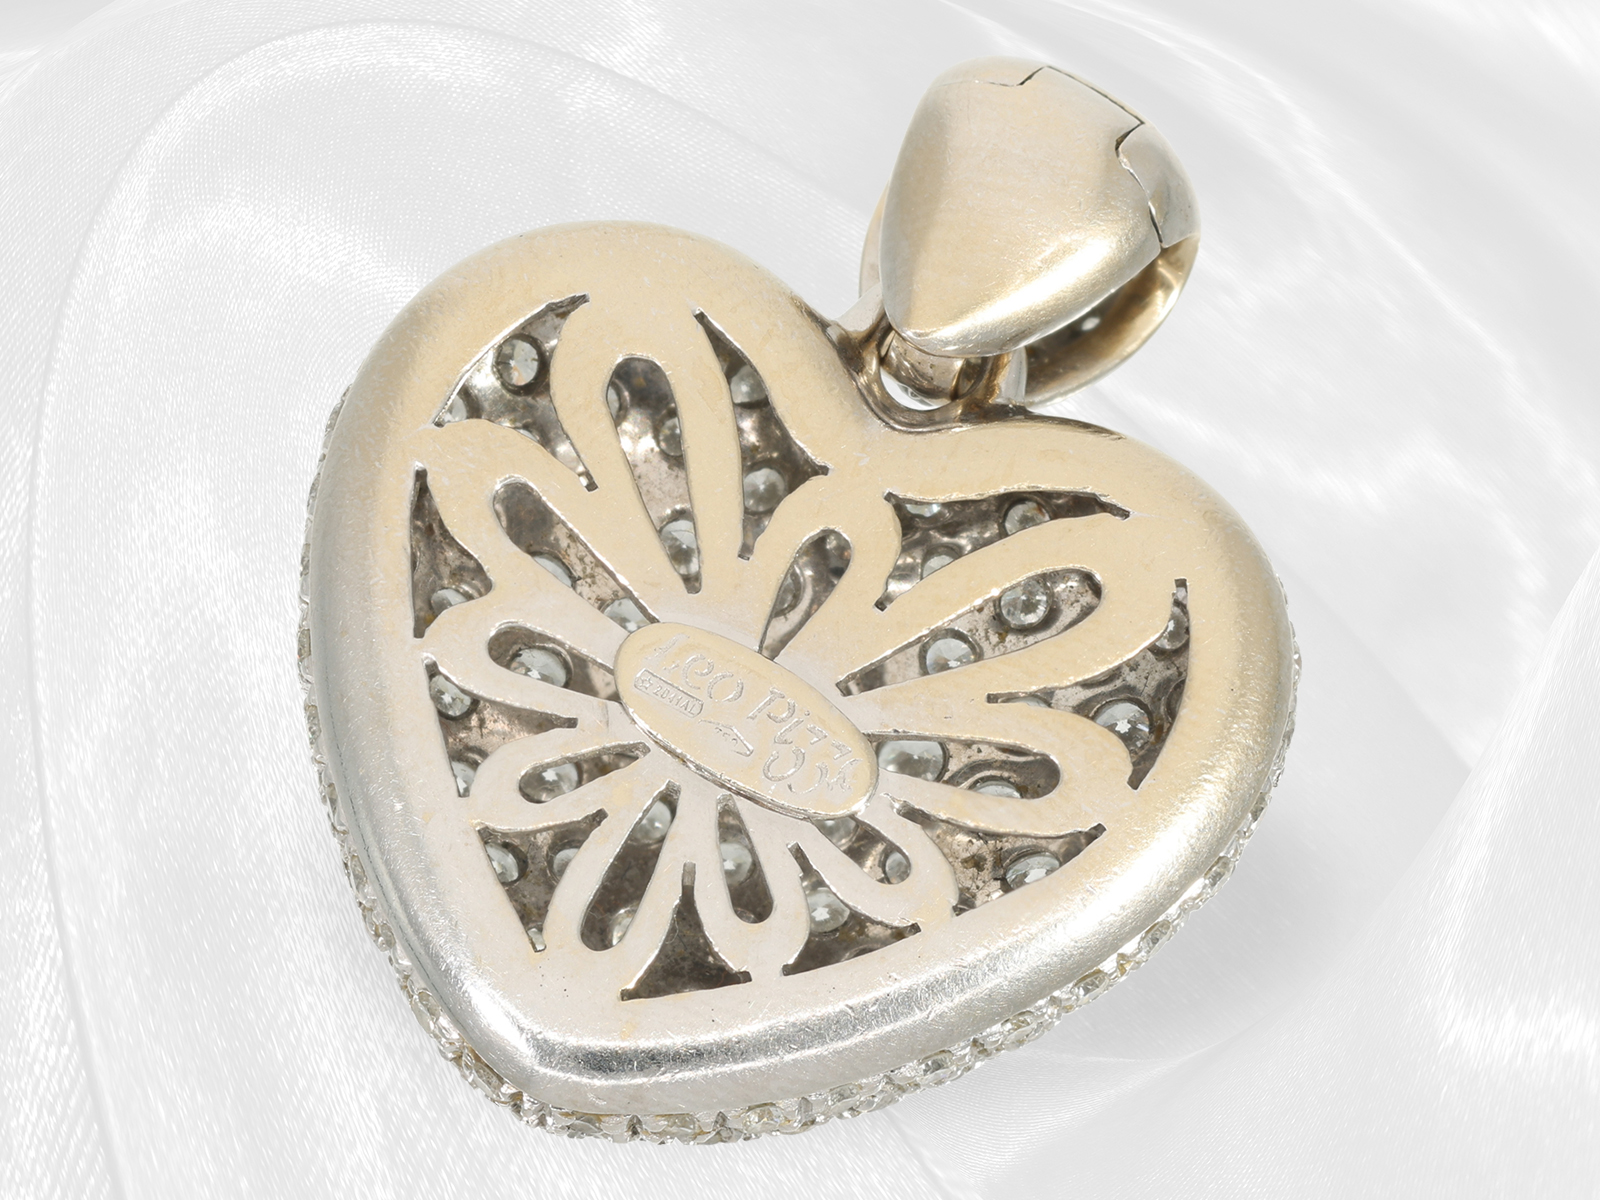 Italian richly set brilliant-cut diamond heart pendant, approx. 4ct brilliant-cut diamonds - Image 8 of 8